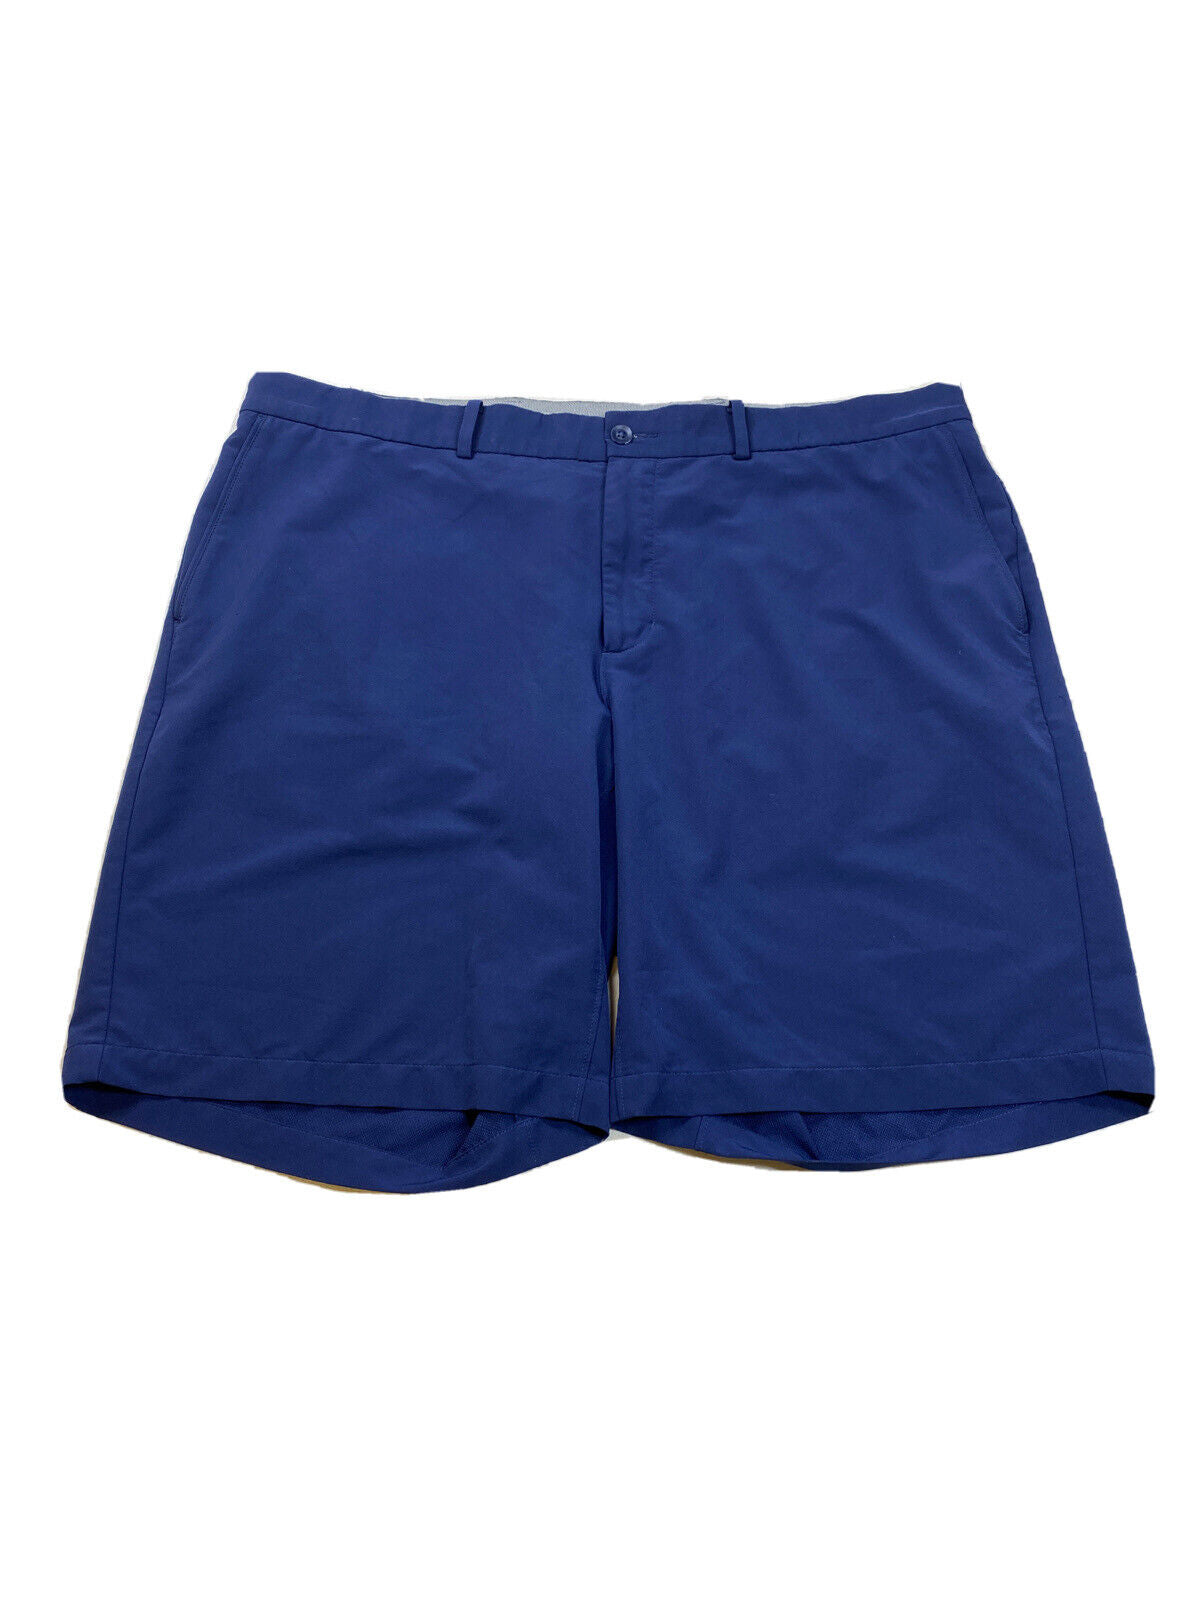 Nike Men's Navy Blue Dri-Fit Polyester Golf Shorts - 40